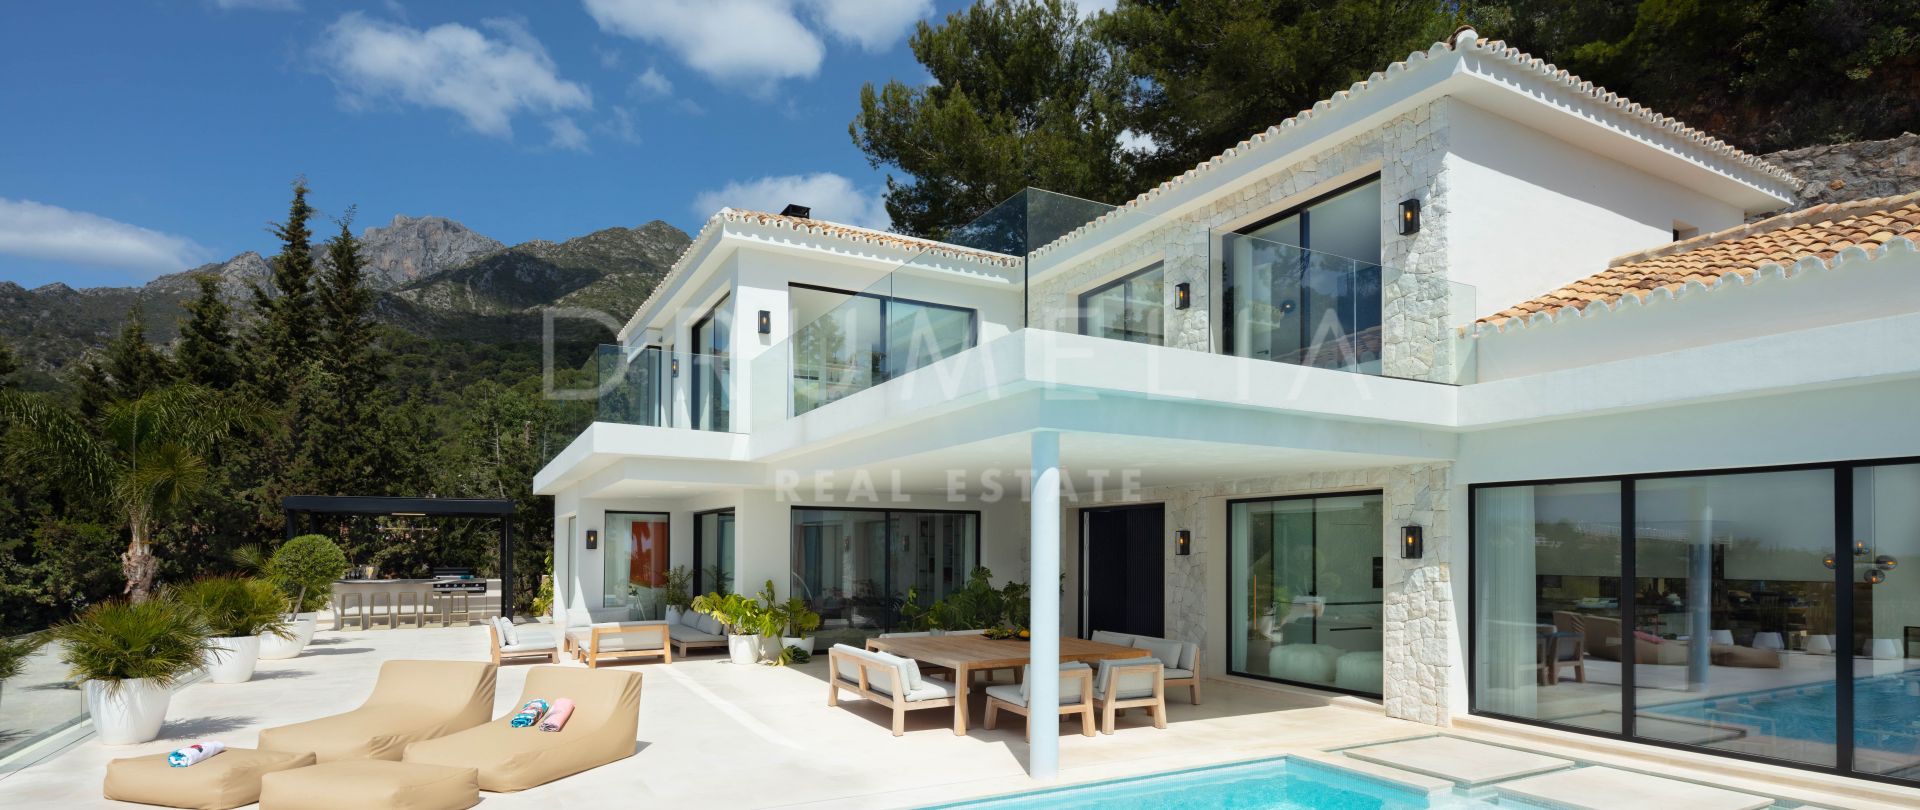 Camojan 45 - Exquisite Luxury Modern Villa, Cascada de Camojan, Marbella Golden Mile